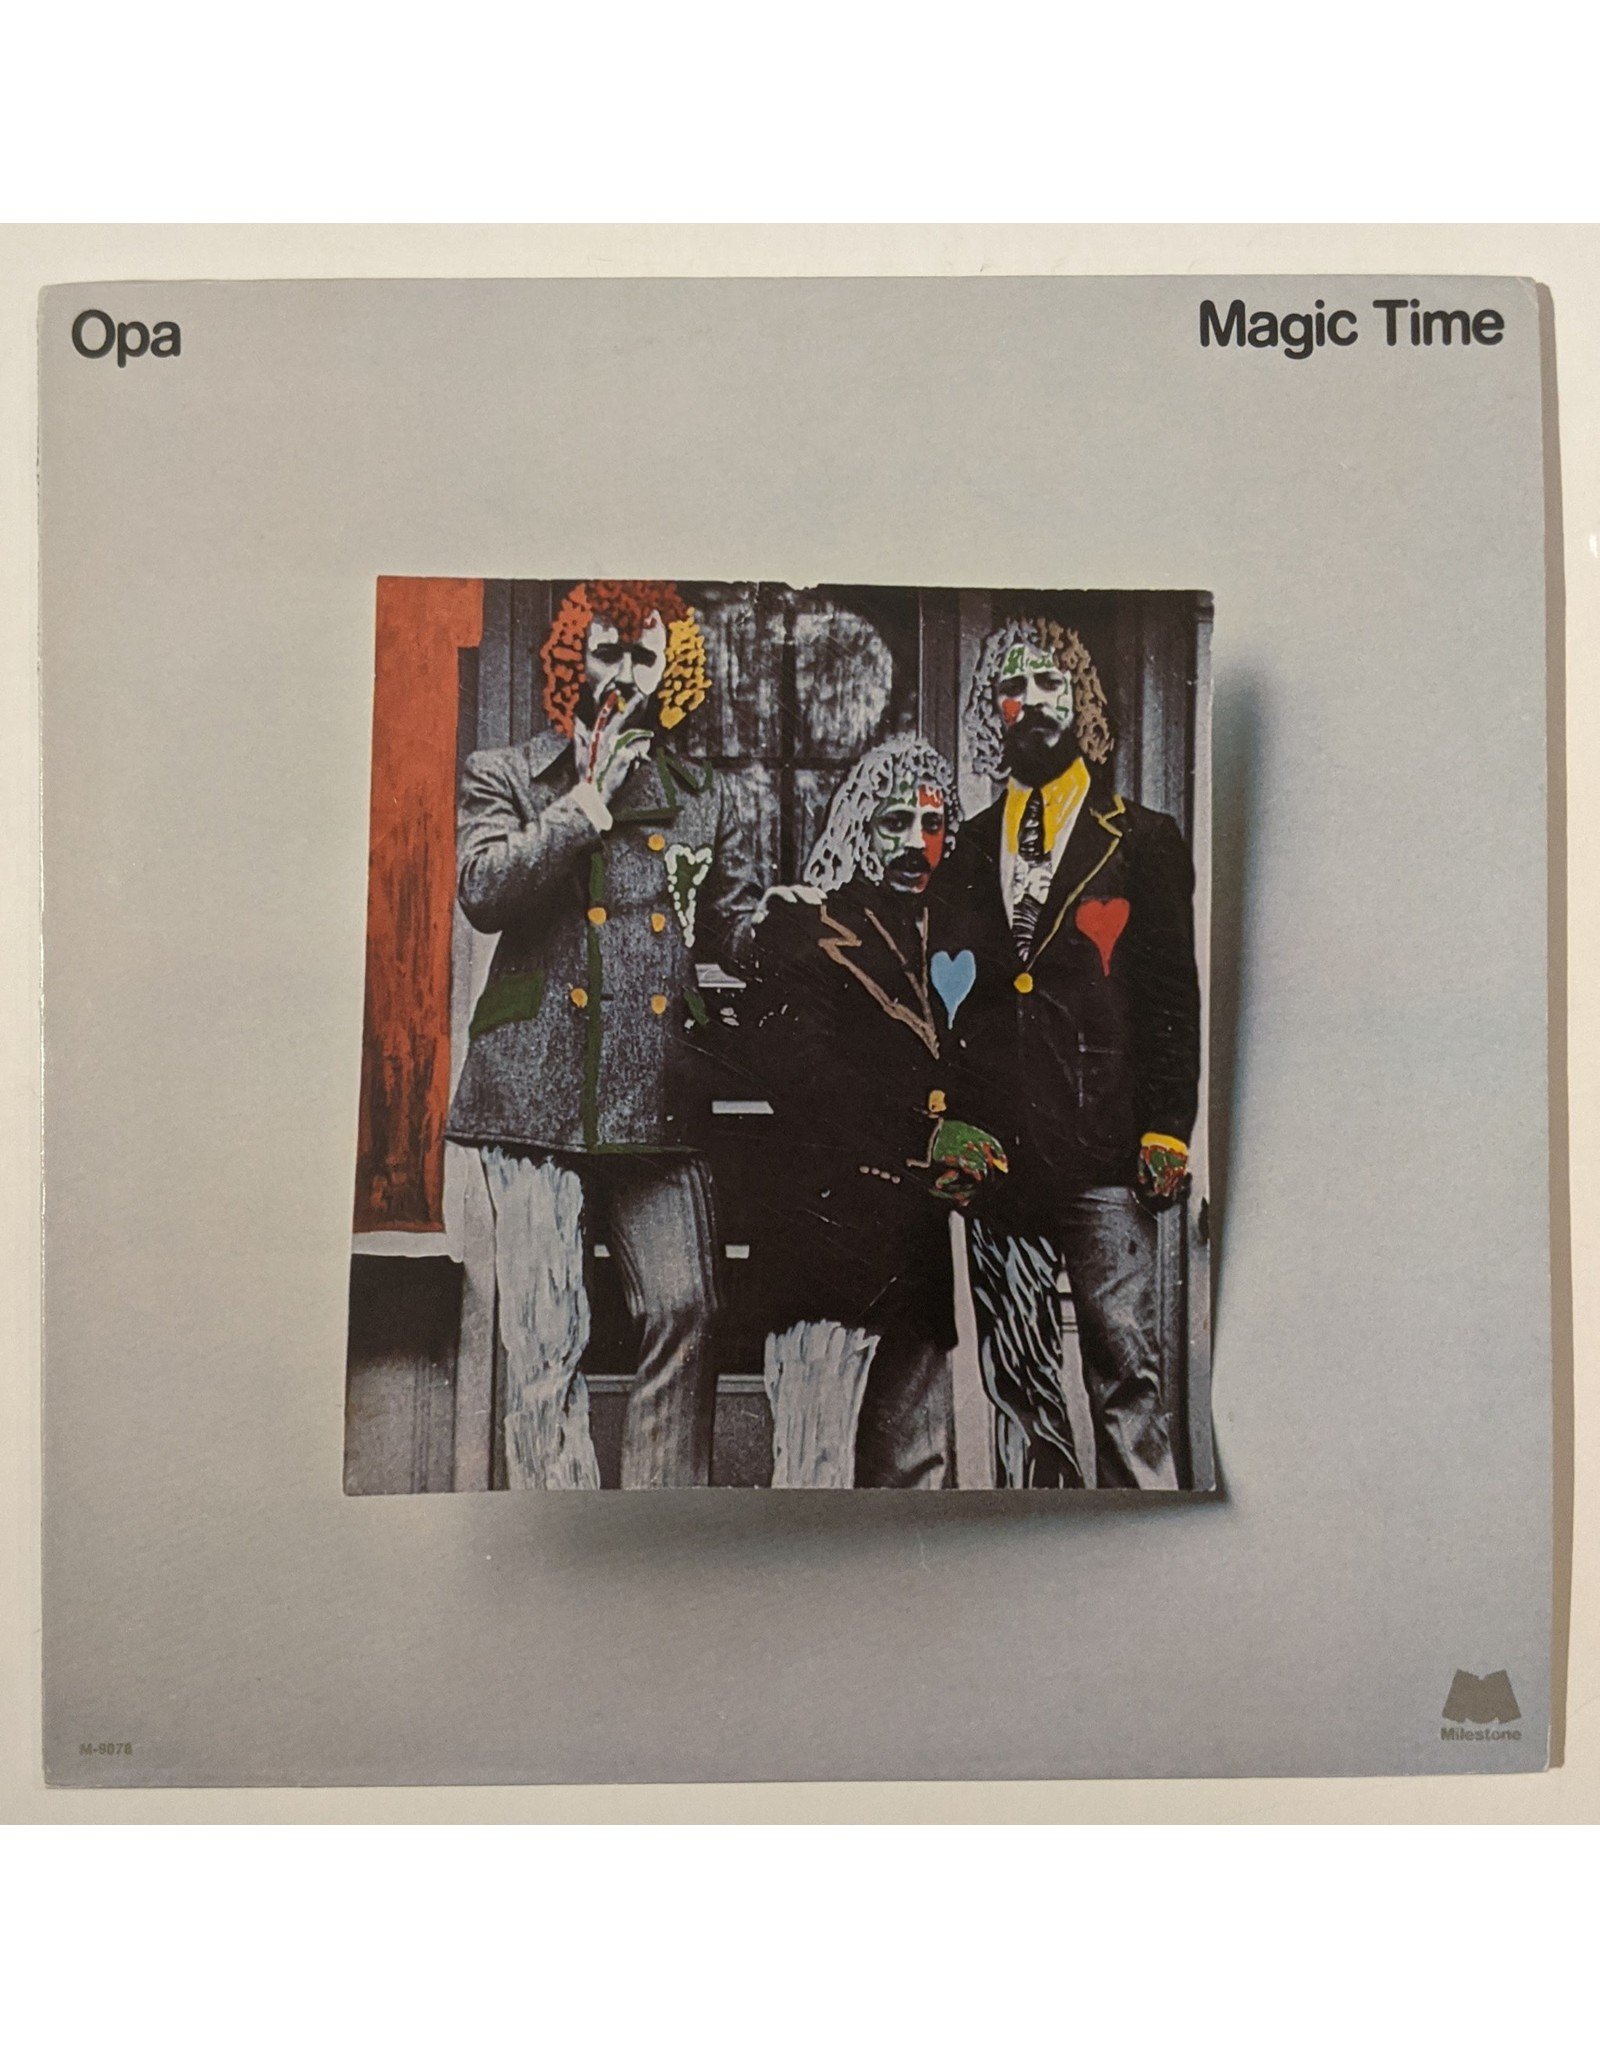 USED: Opa: Magic Time LP